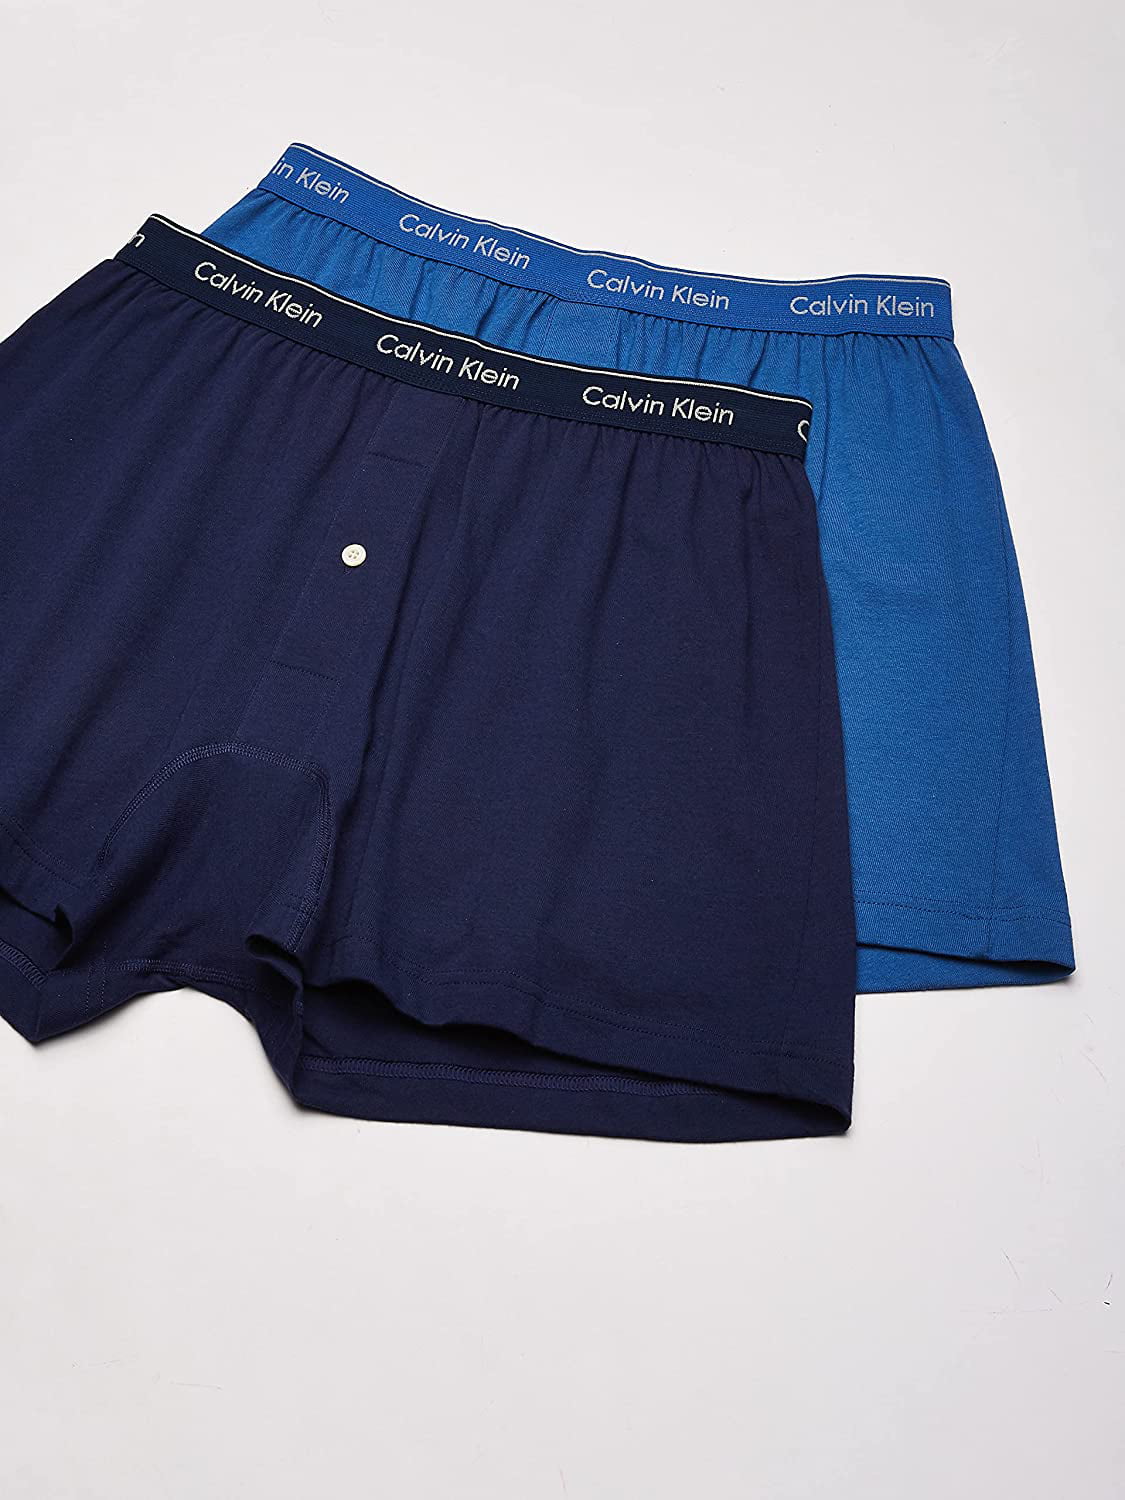 Calvin Klein Men's Cotton Classics Knit Boxer -3 Pack, Black, Small -  